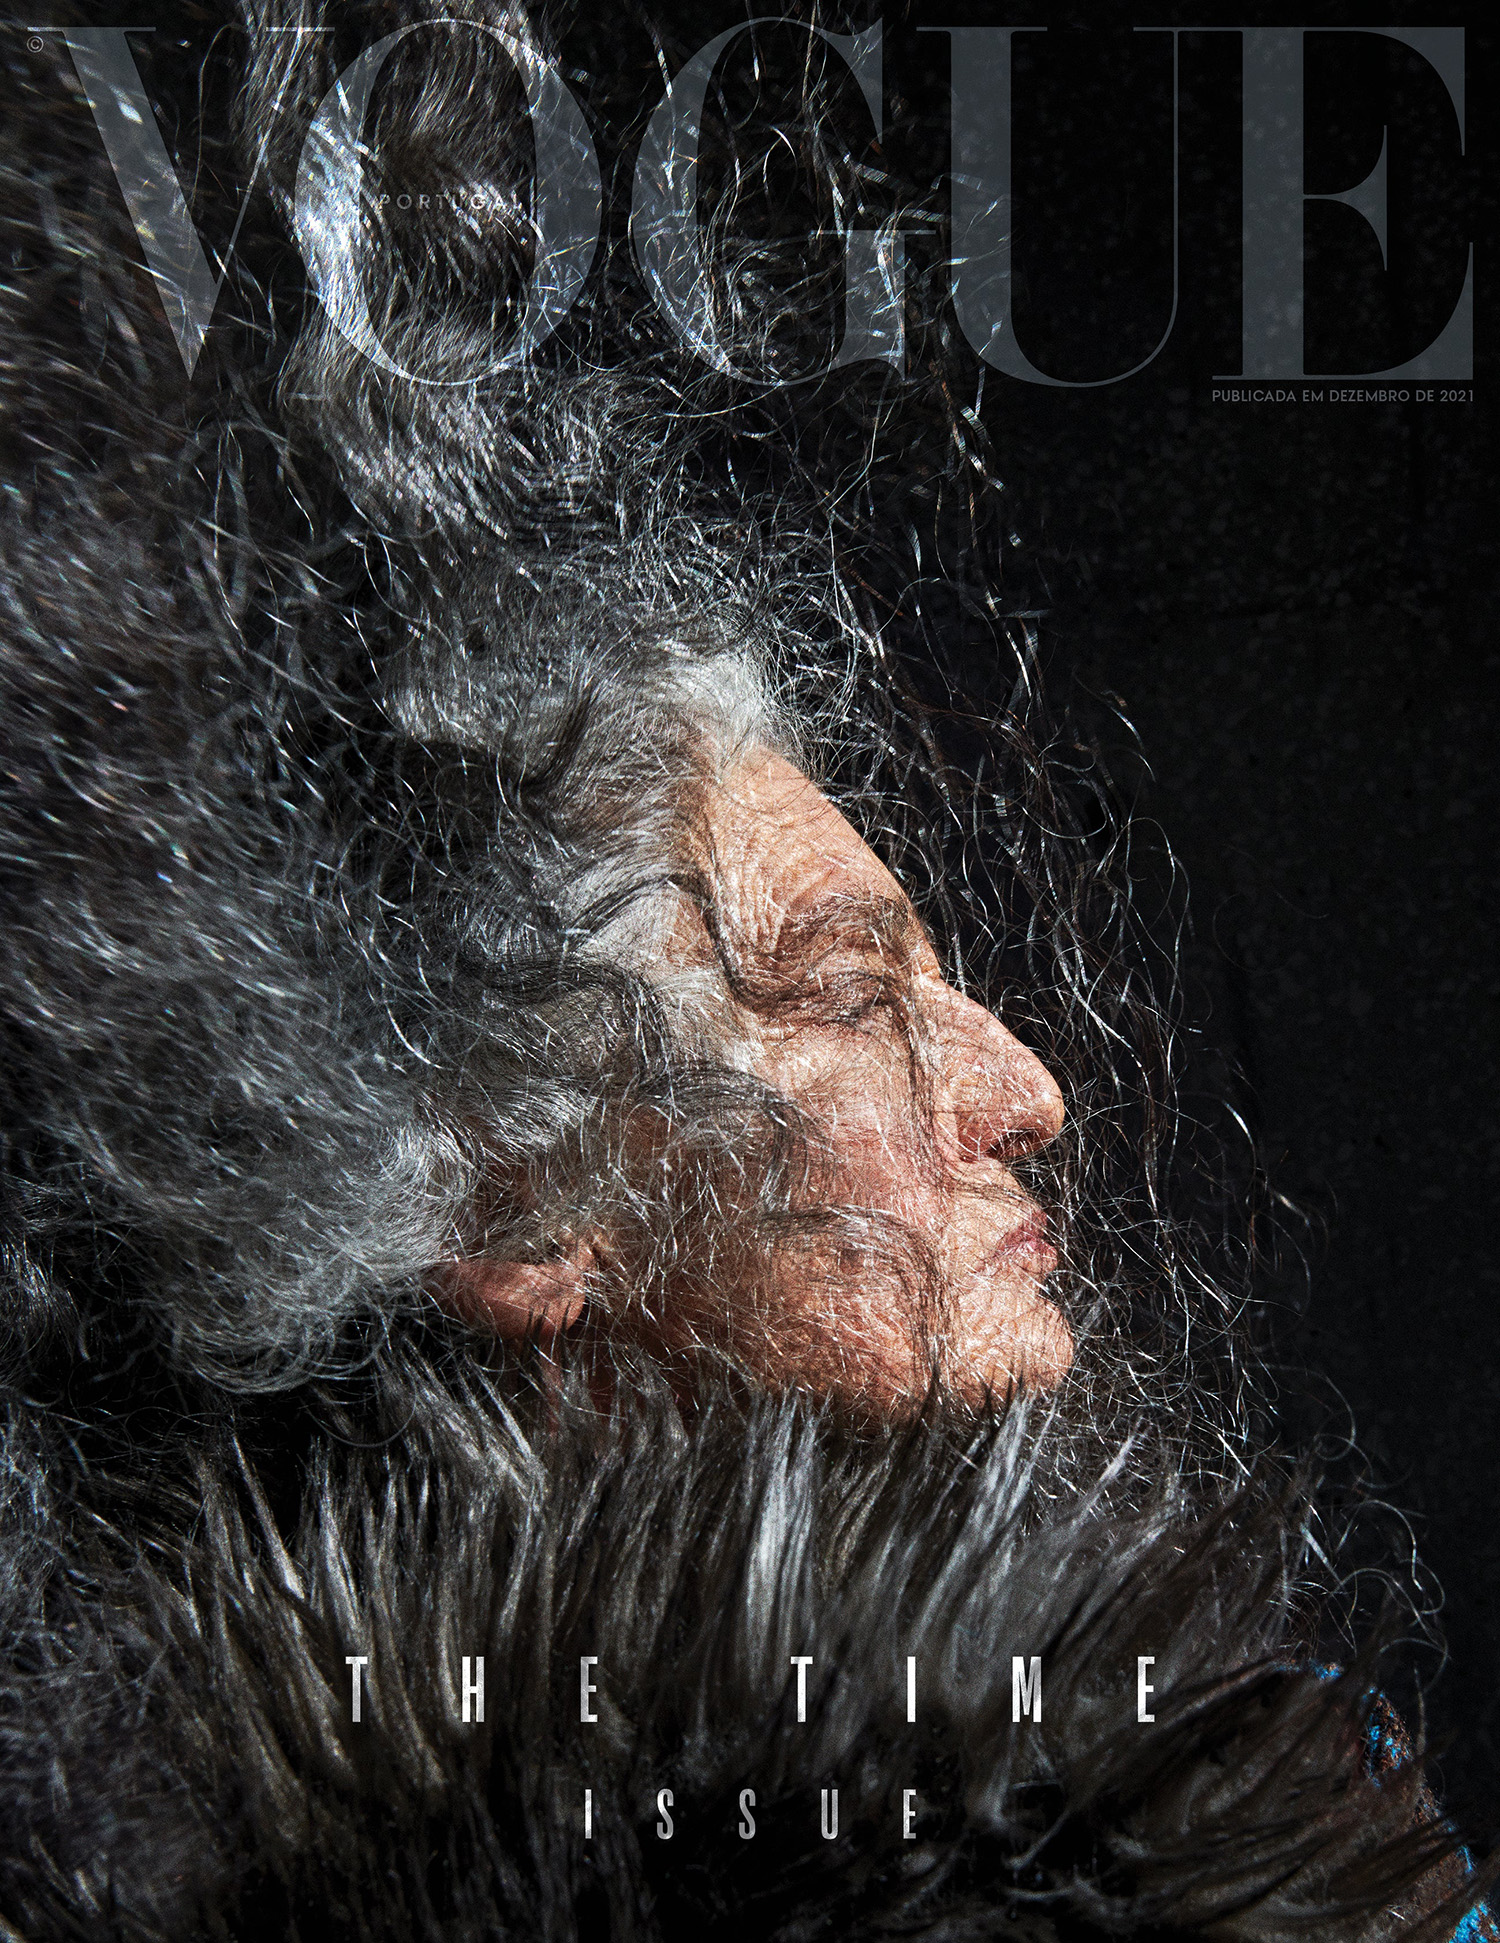 Benedetta Barzini in Prada on Vogue Portugal December 2021/January 2022 cover by Branislav Simoncik